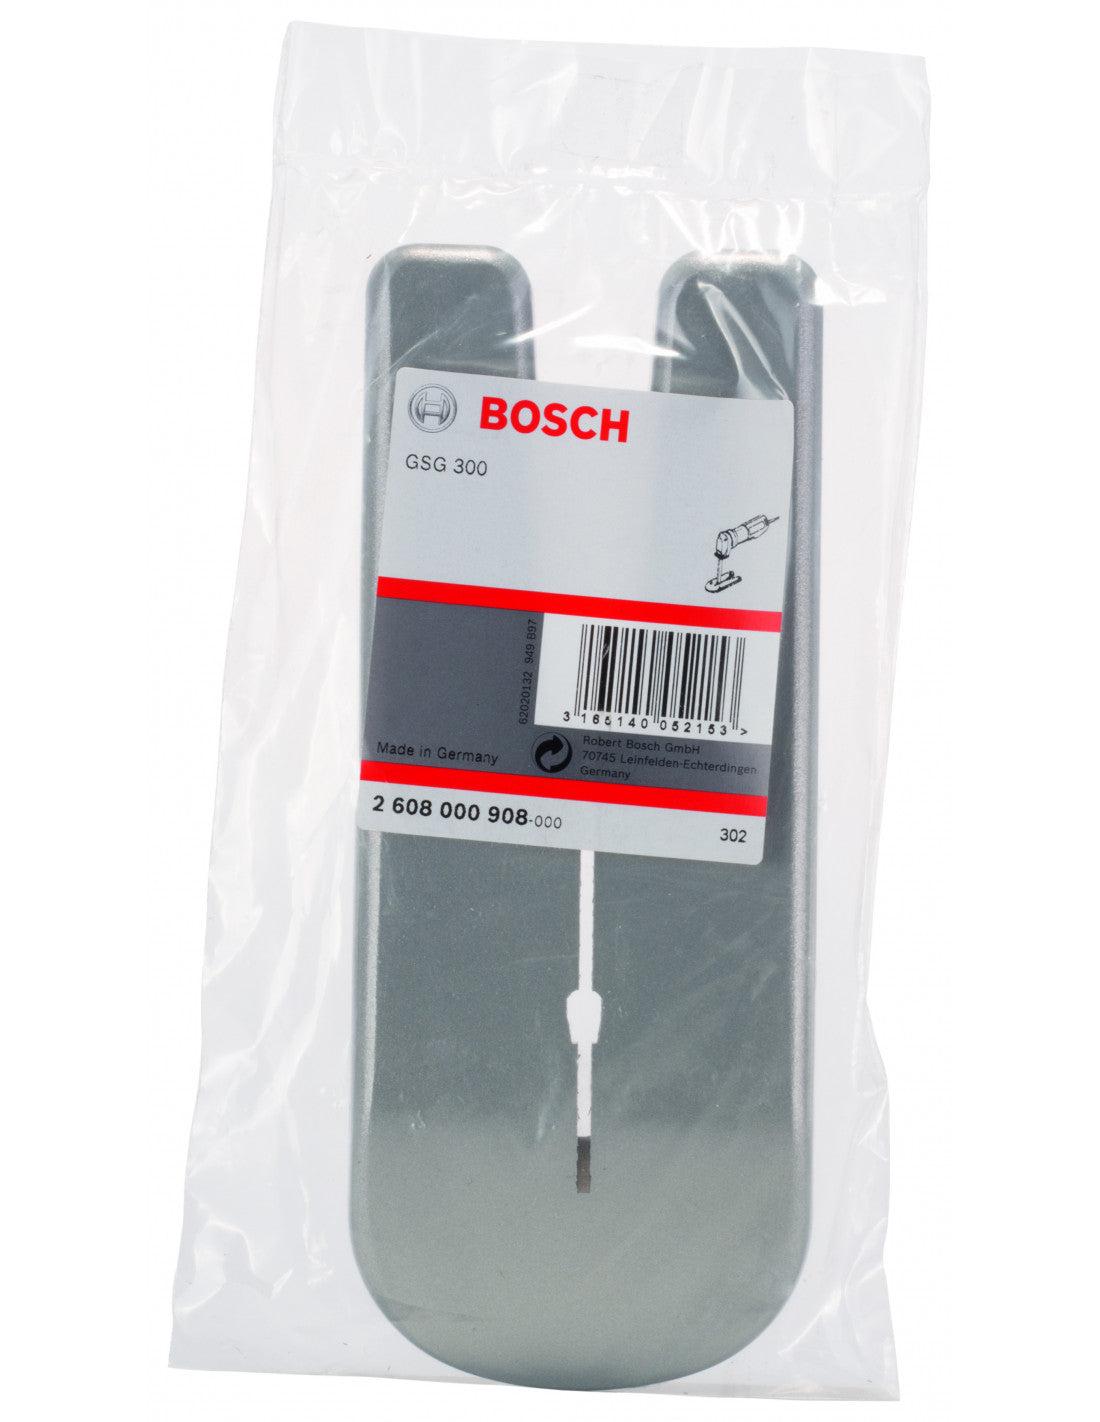 Bosch GSG 300 Foot plate 2608000908 Power Tool Services